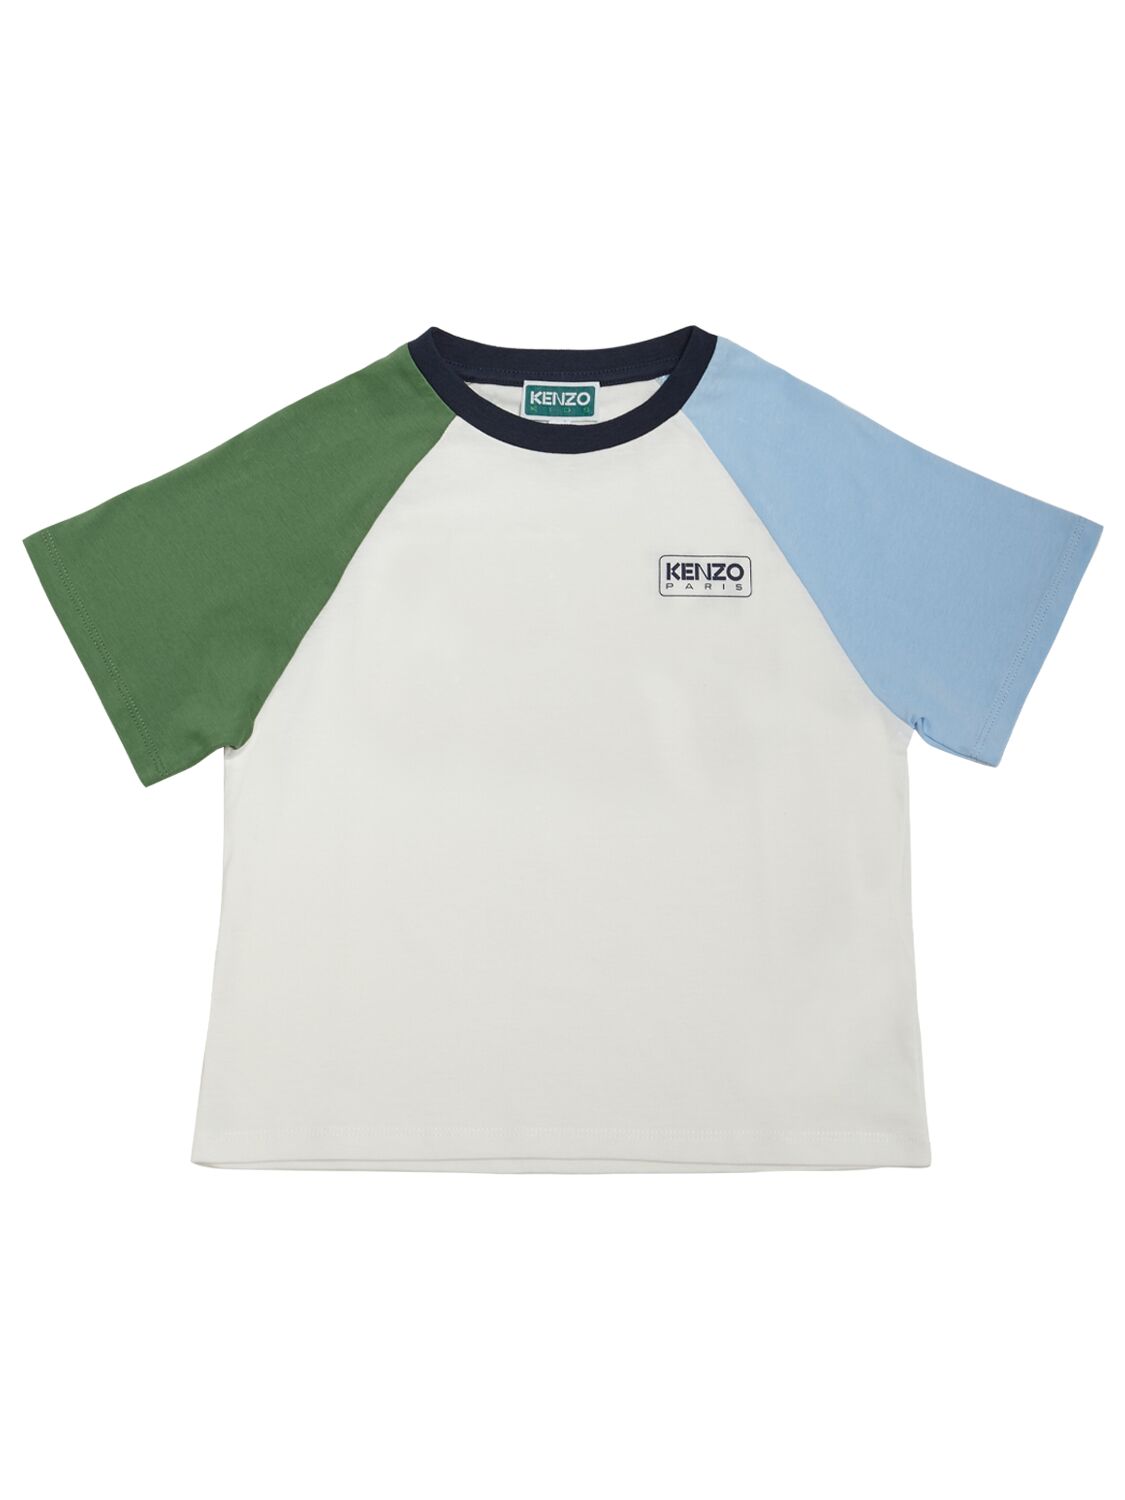 Kenzo Kids' Cotton Jersey T-shirt In White